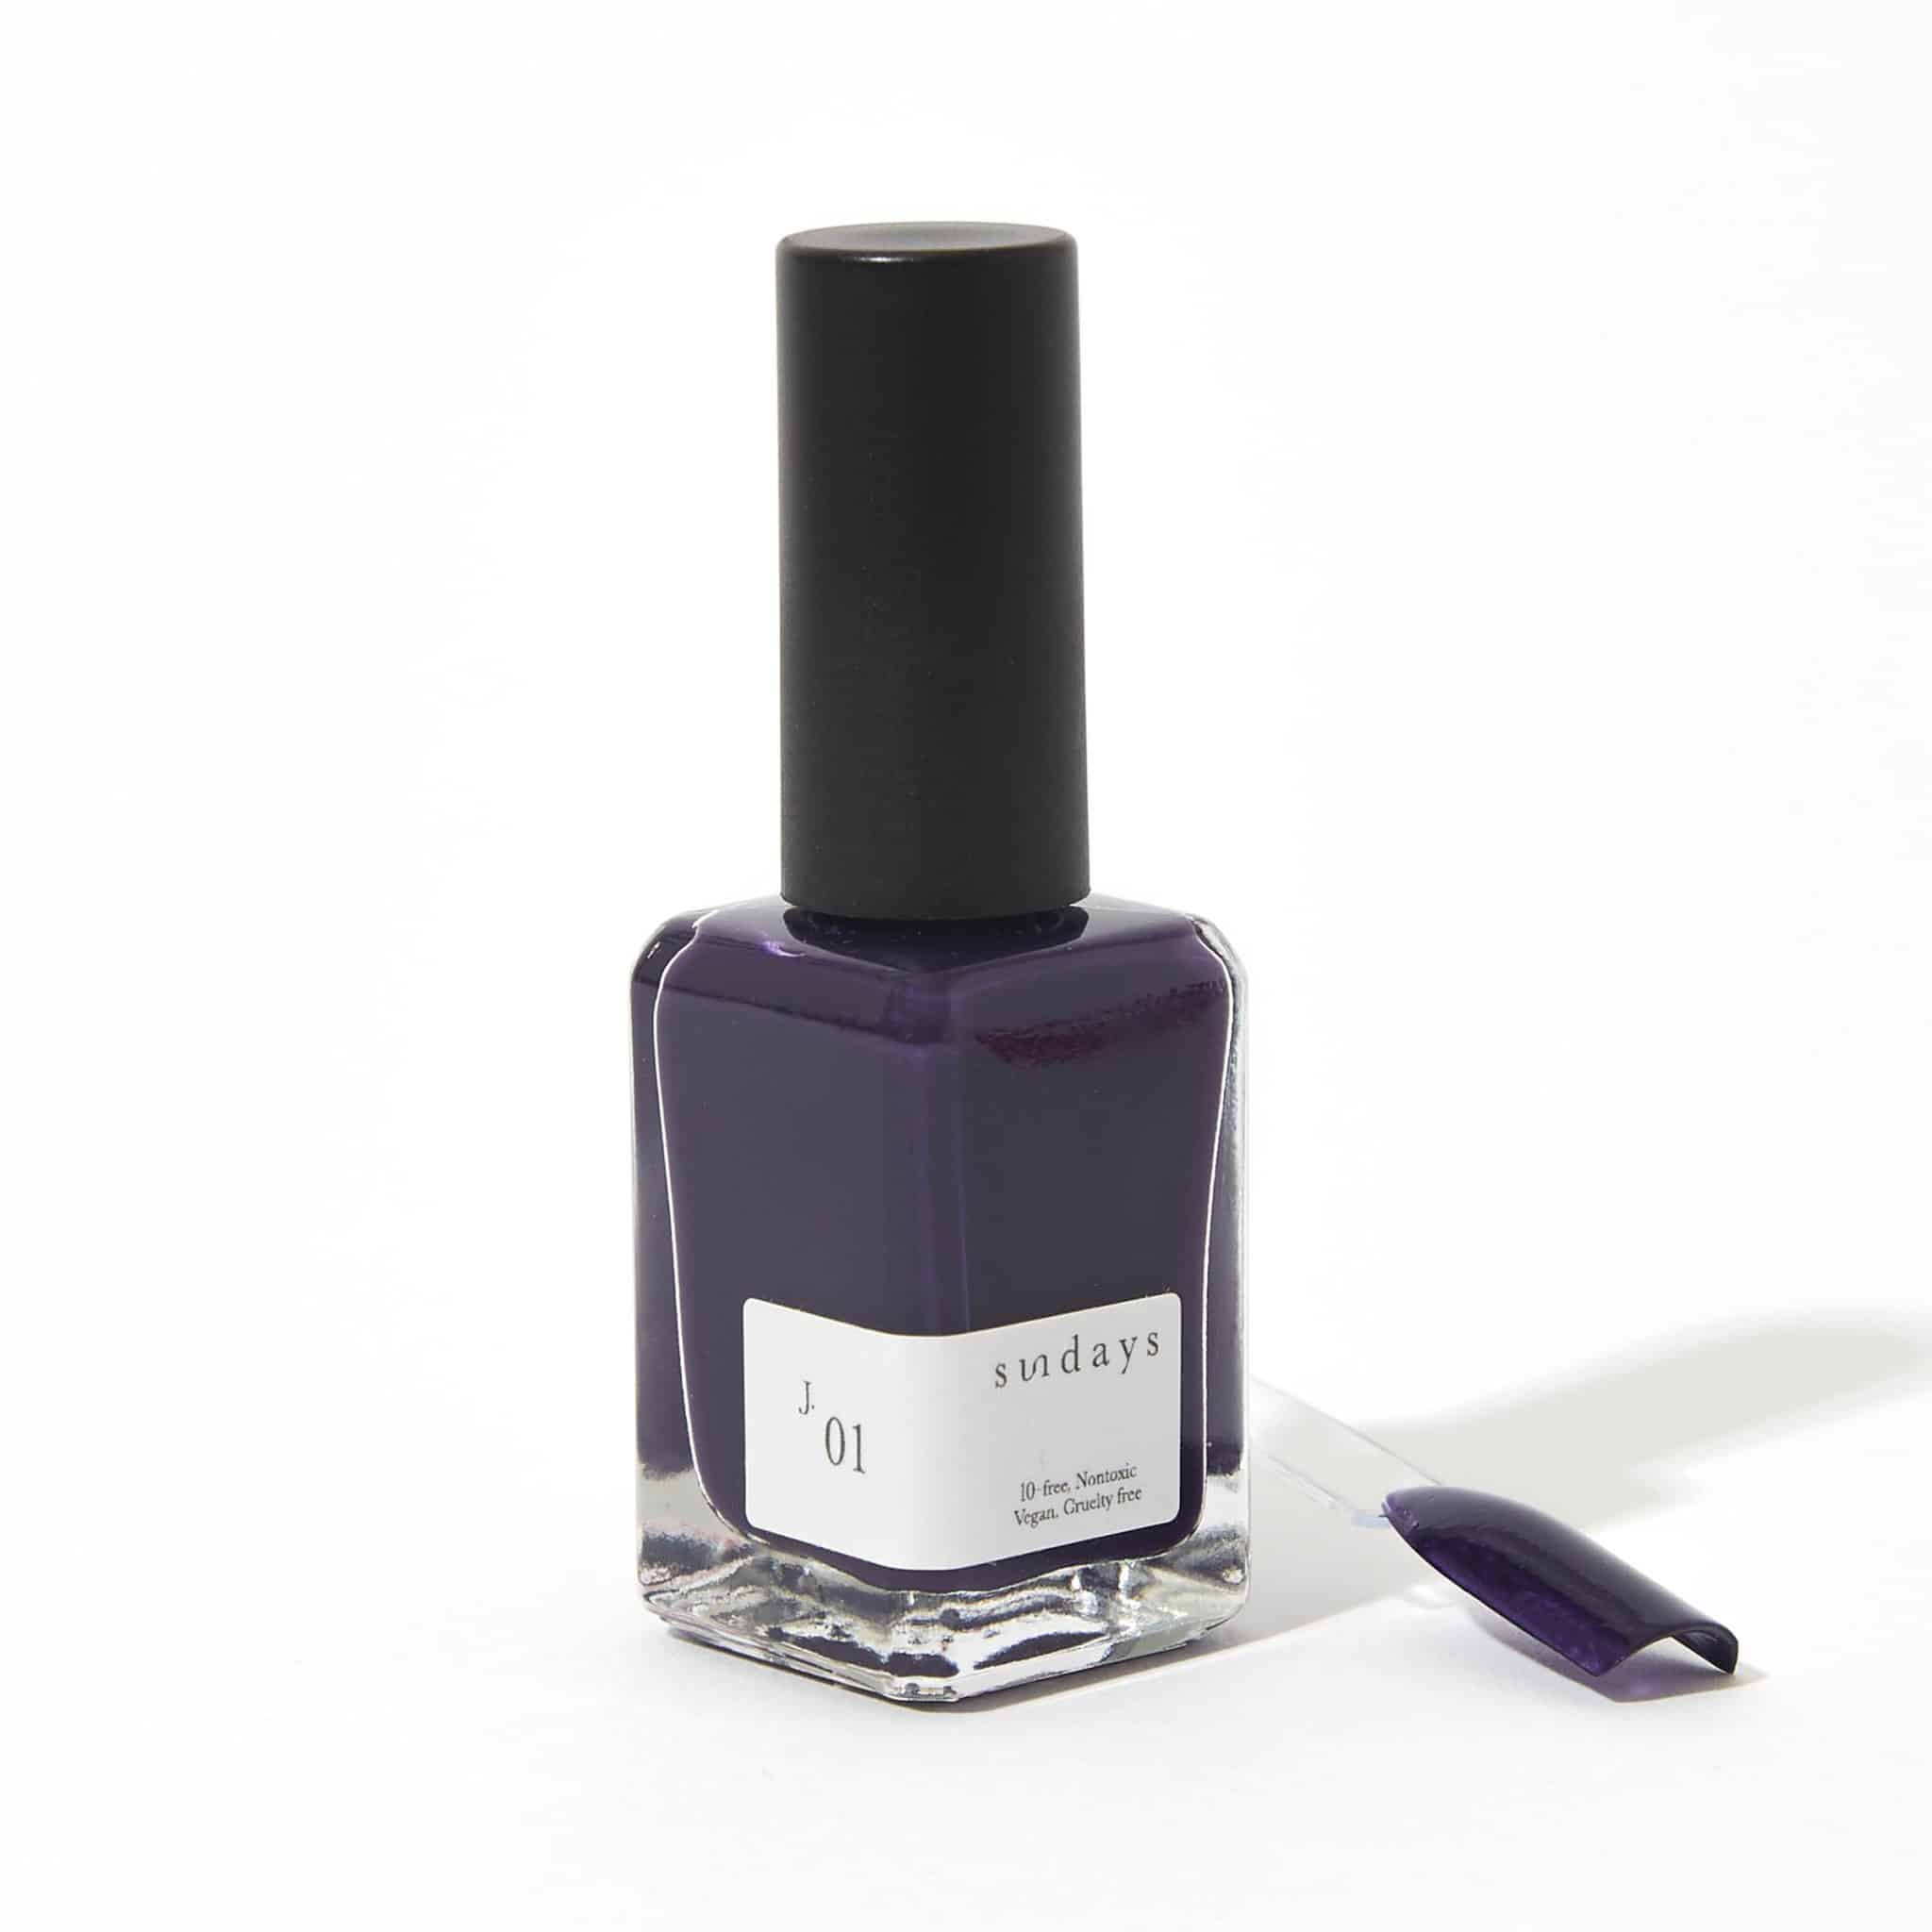 non-toxic nail polish in midnight purple